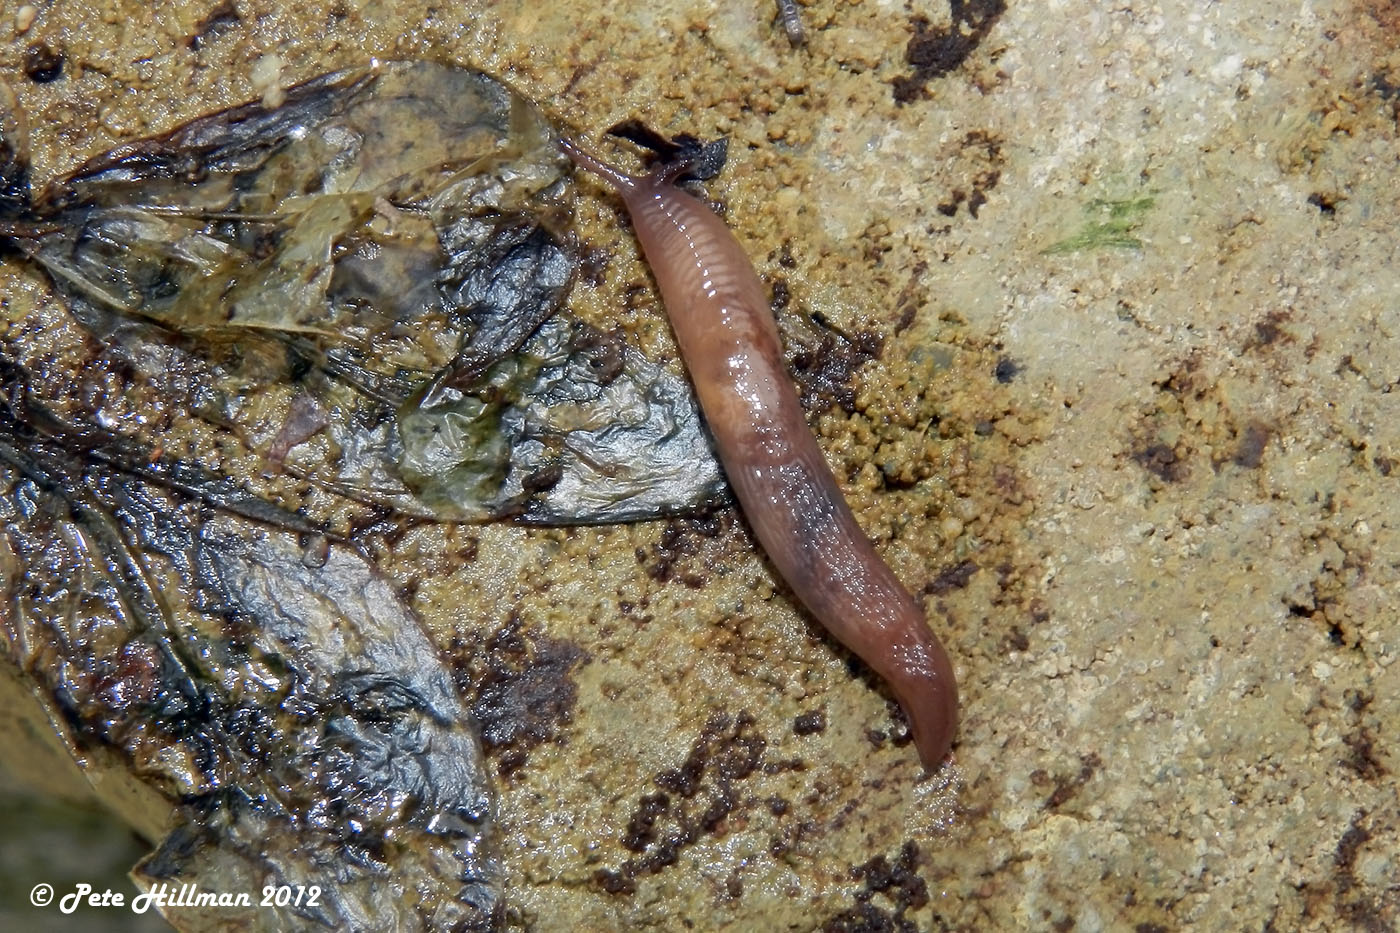 Chestnut Slug (Deroceras invadens)